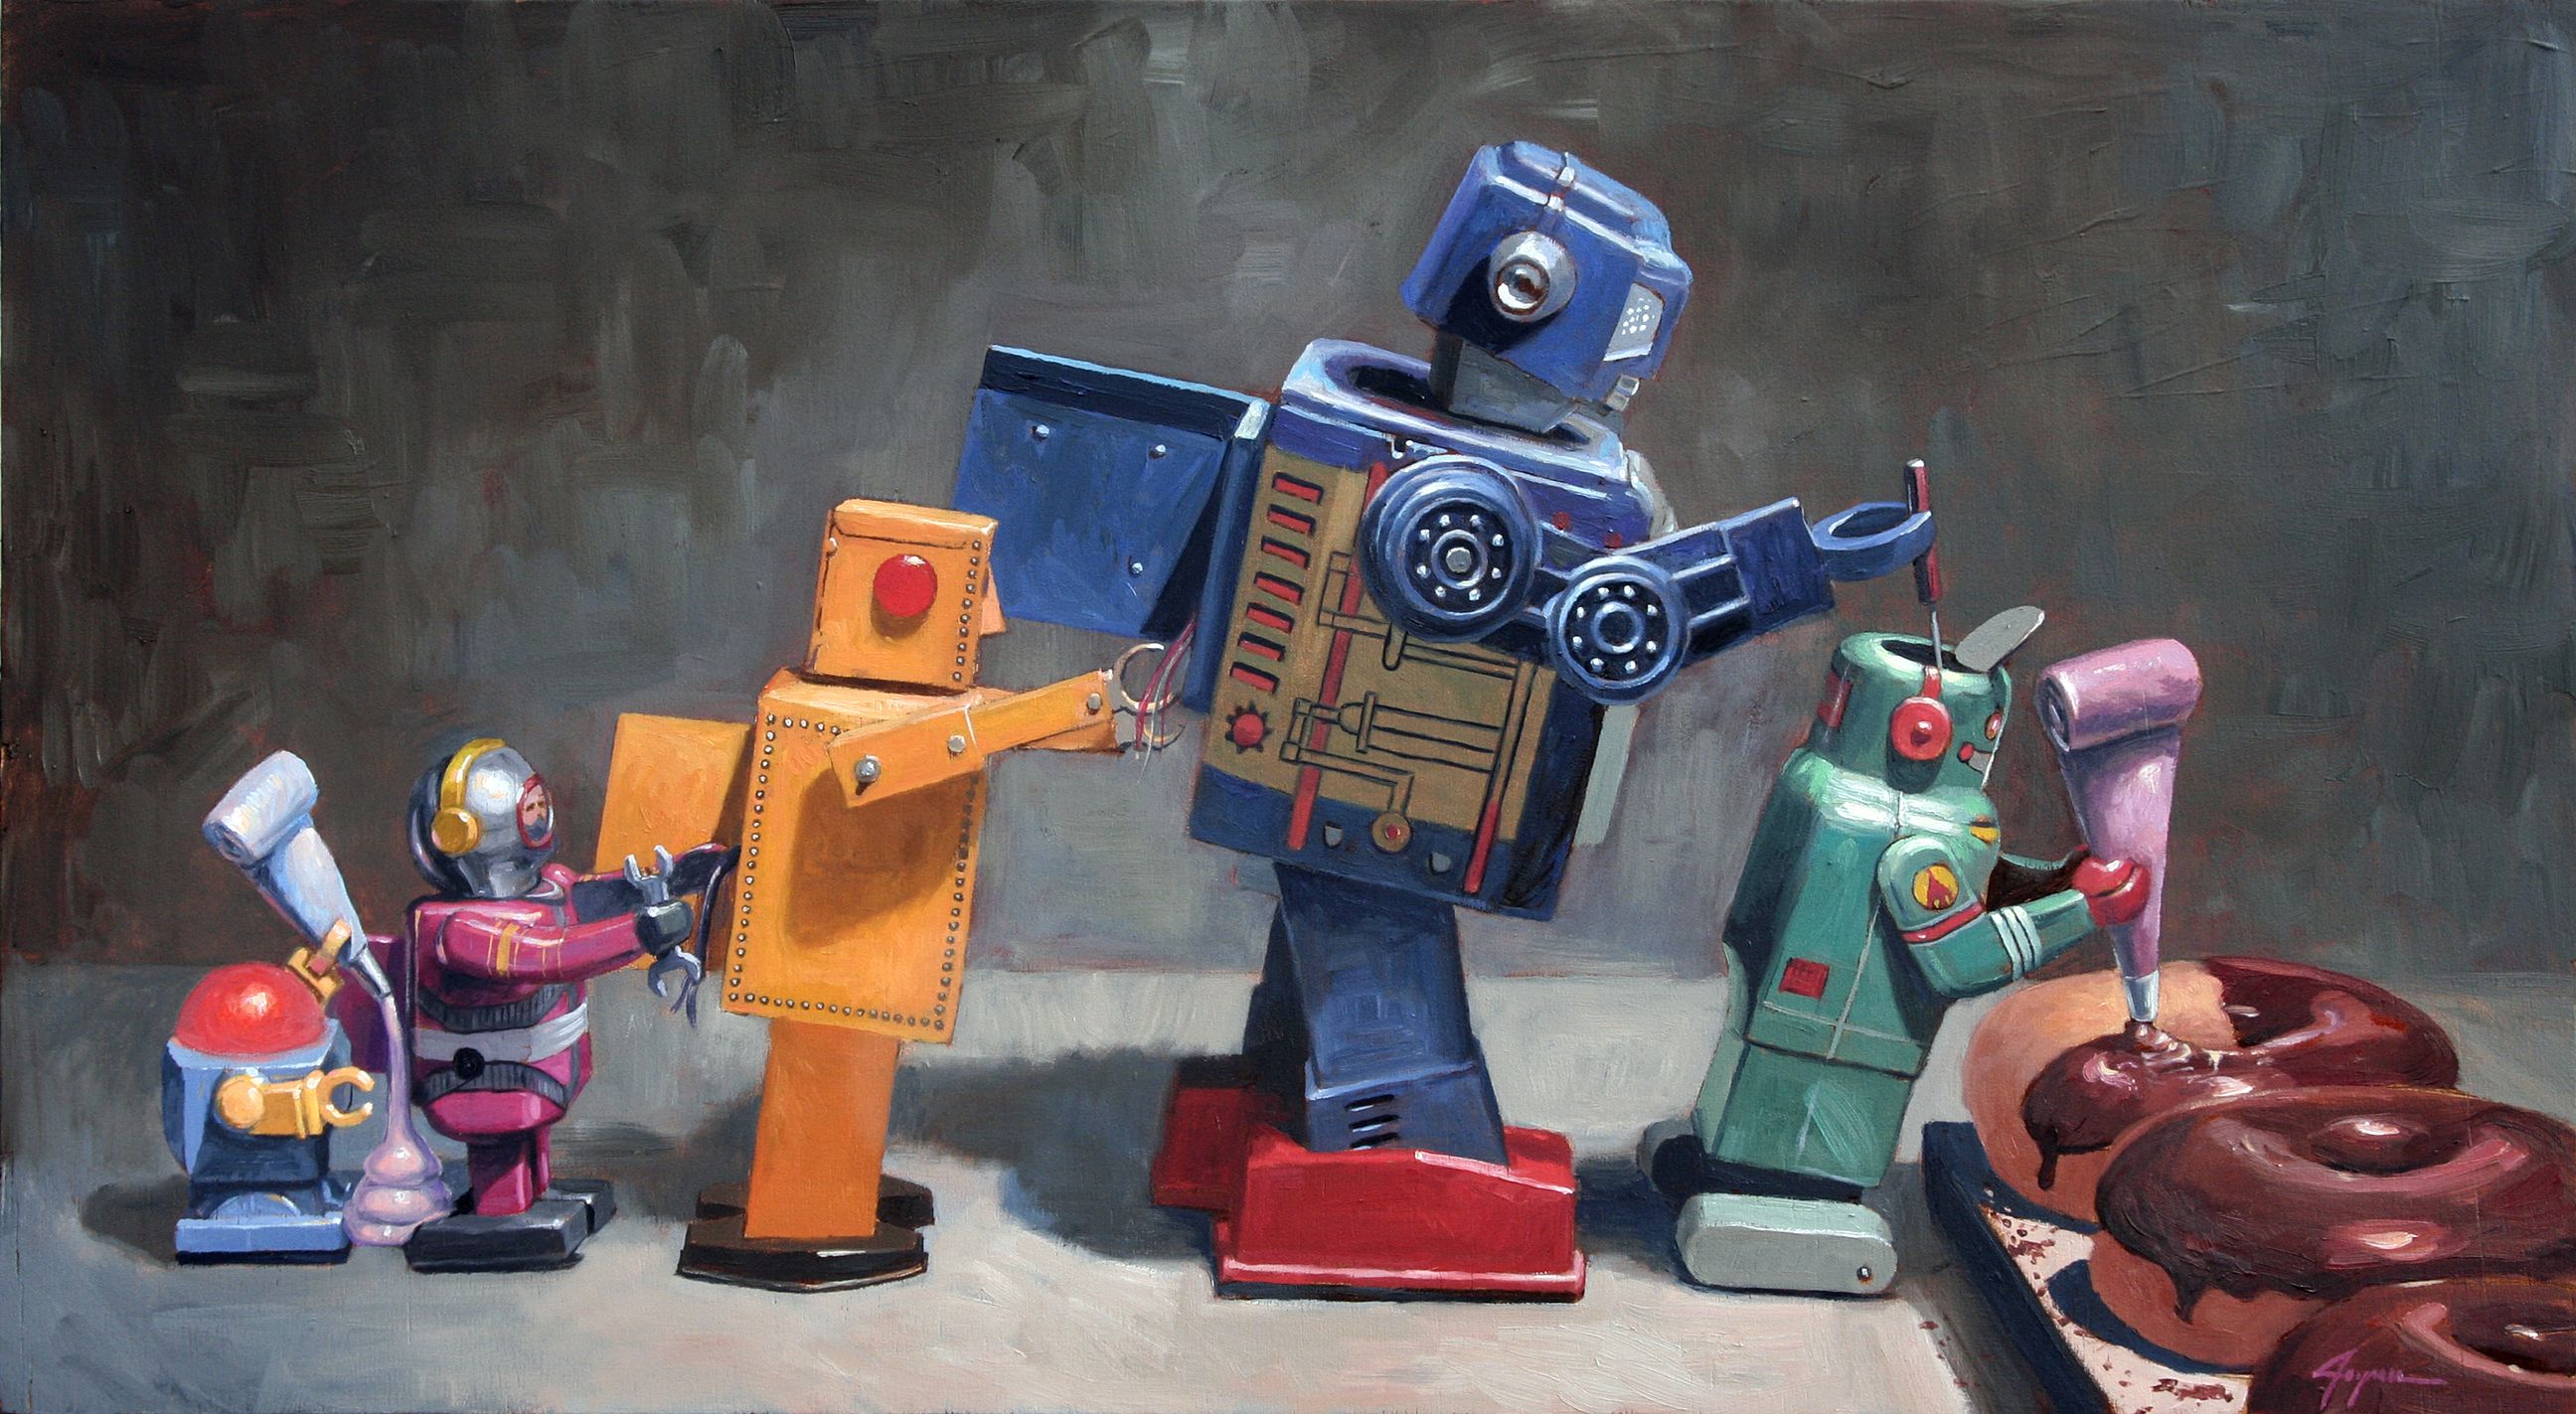 famous robot cartoon characters